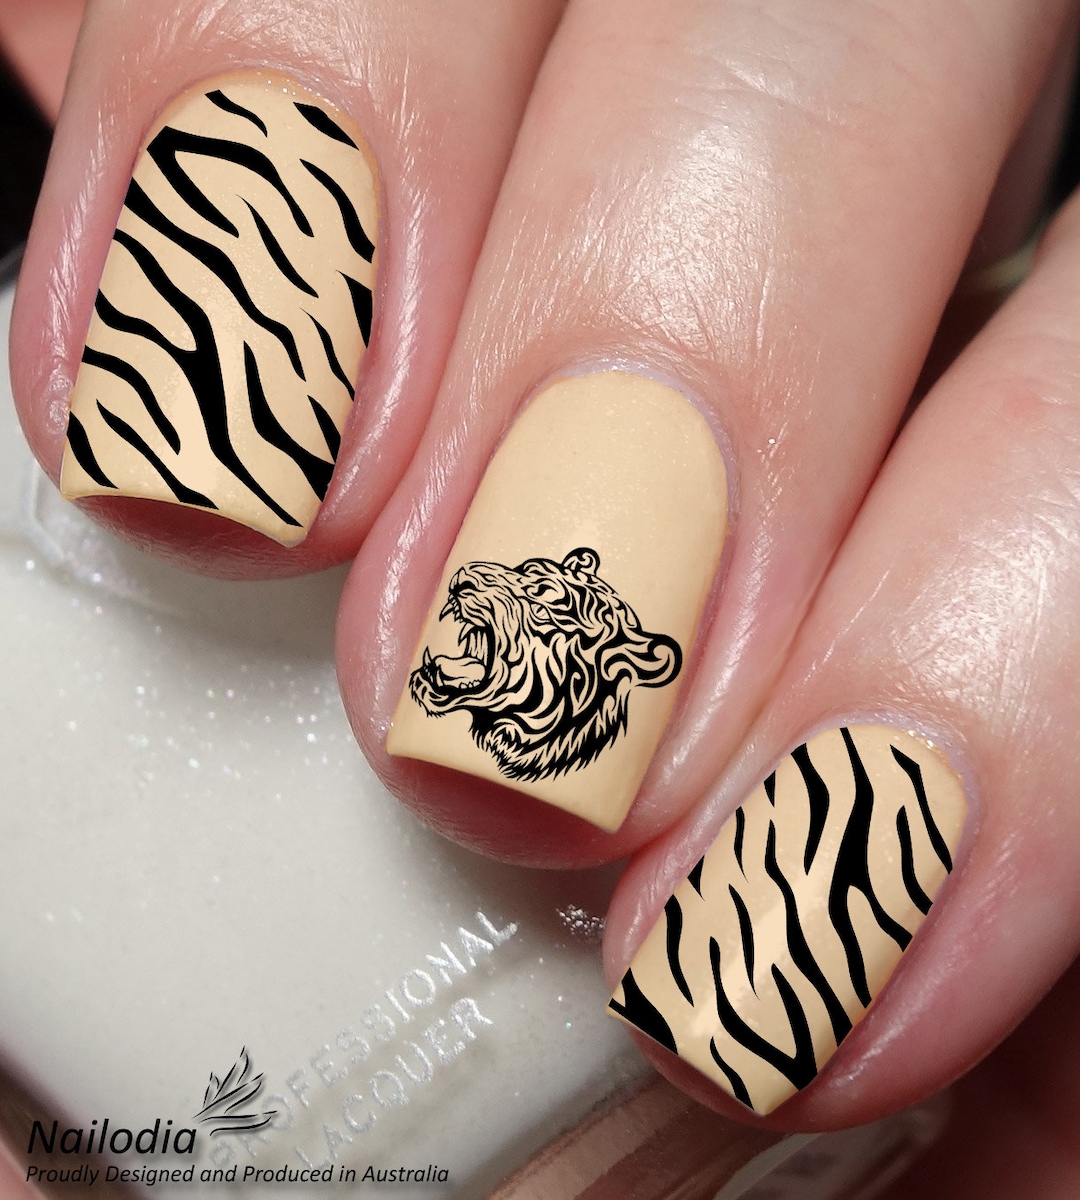 Lion King Inspired Nail Art Design | AmazingNailArt.org